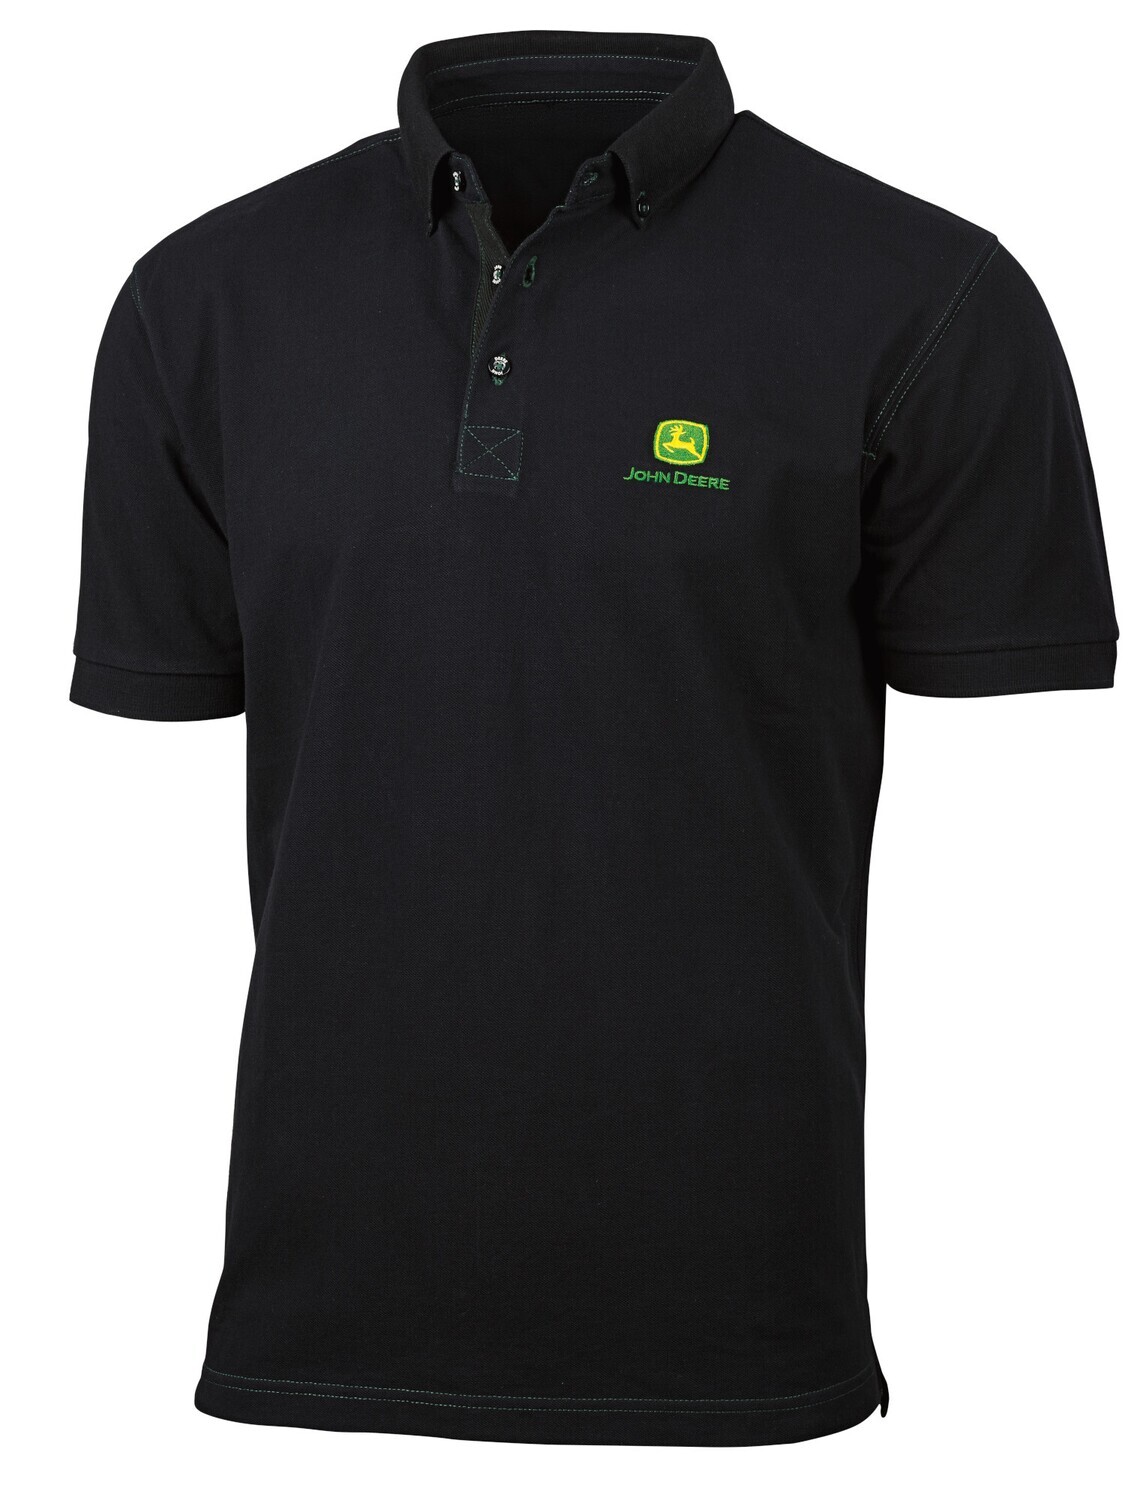 John Deere Black Polo Shirt-MEDIUM